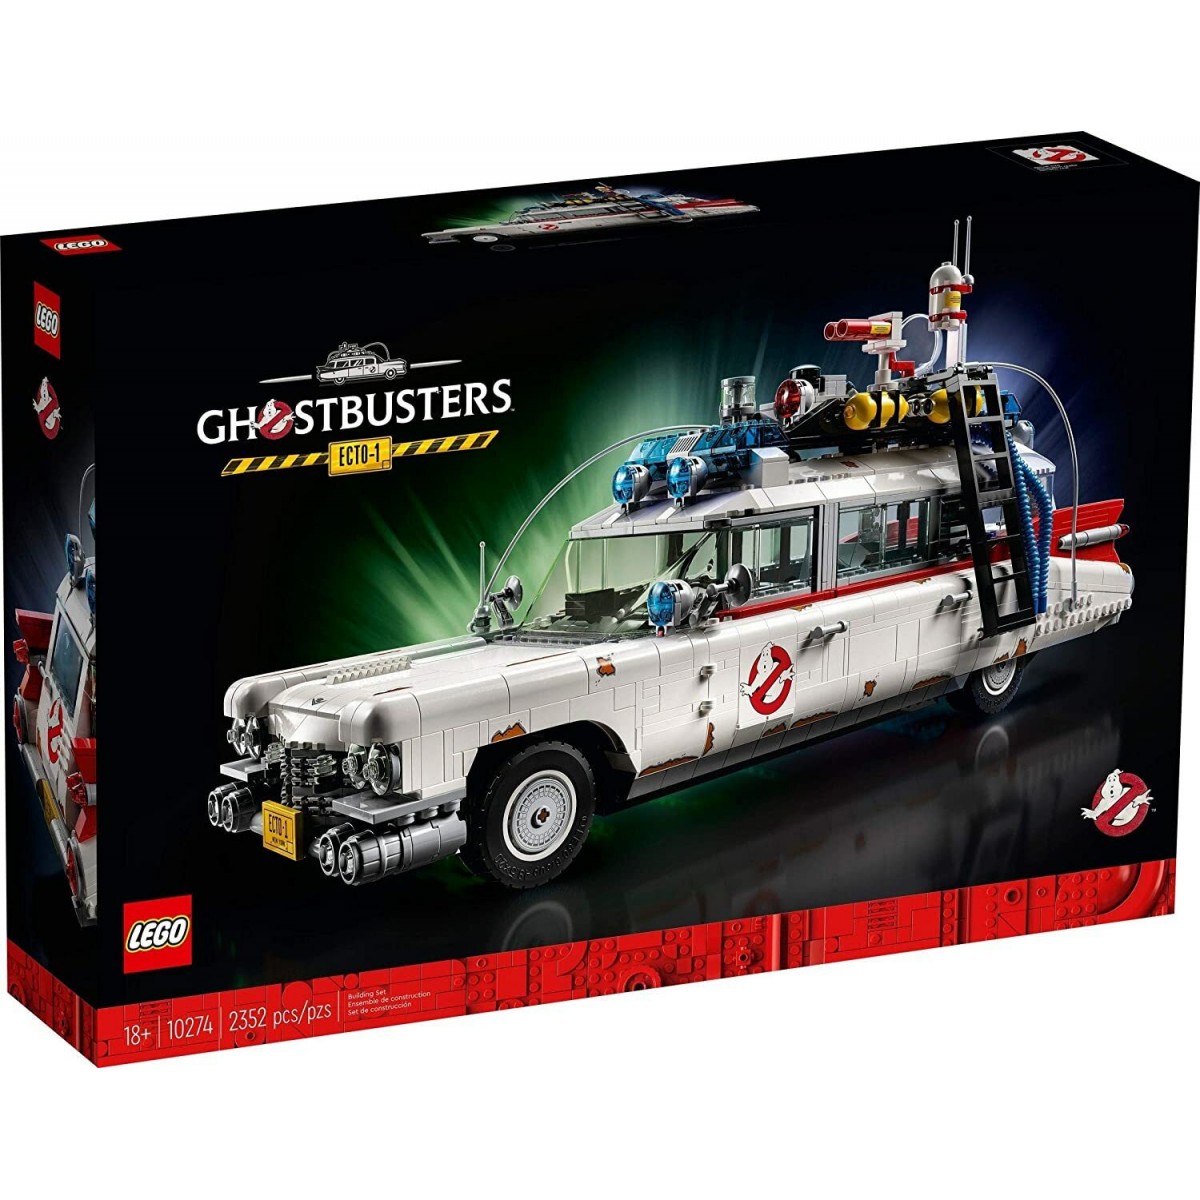 LEGO CREATOR 10274 GHOSTBUSTERS ECTO-1